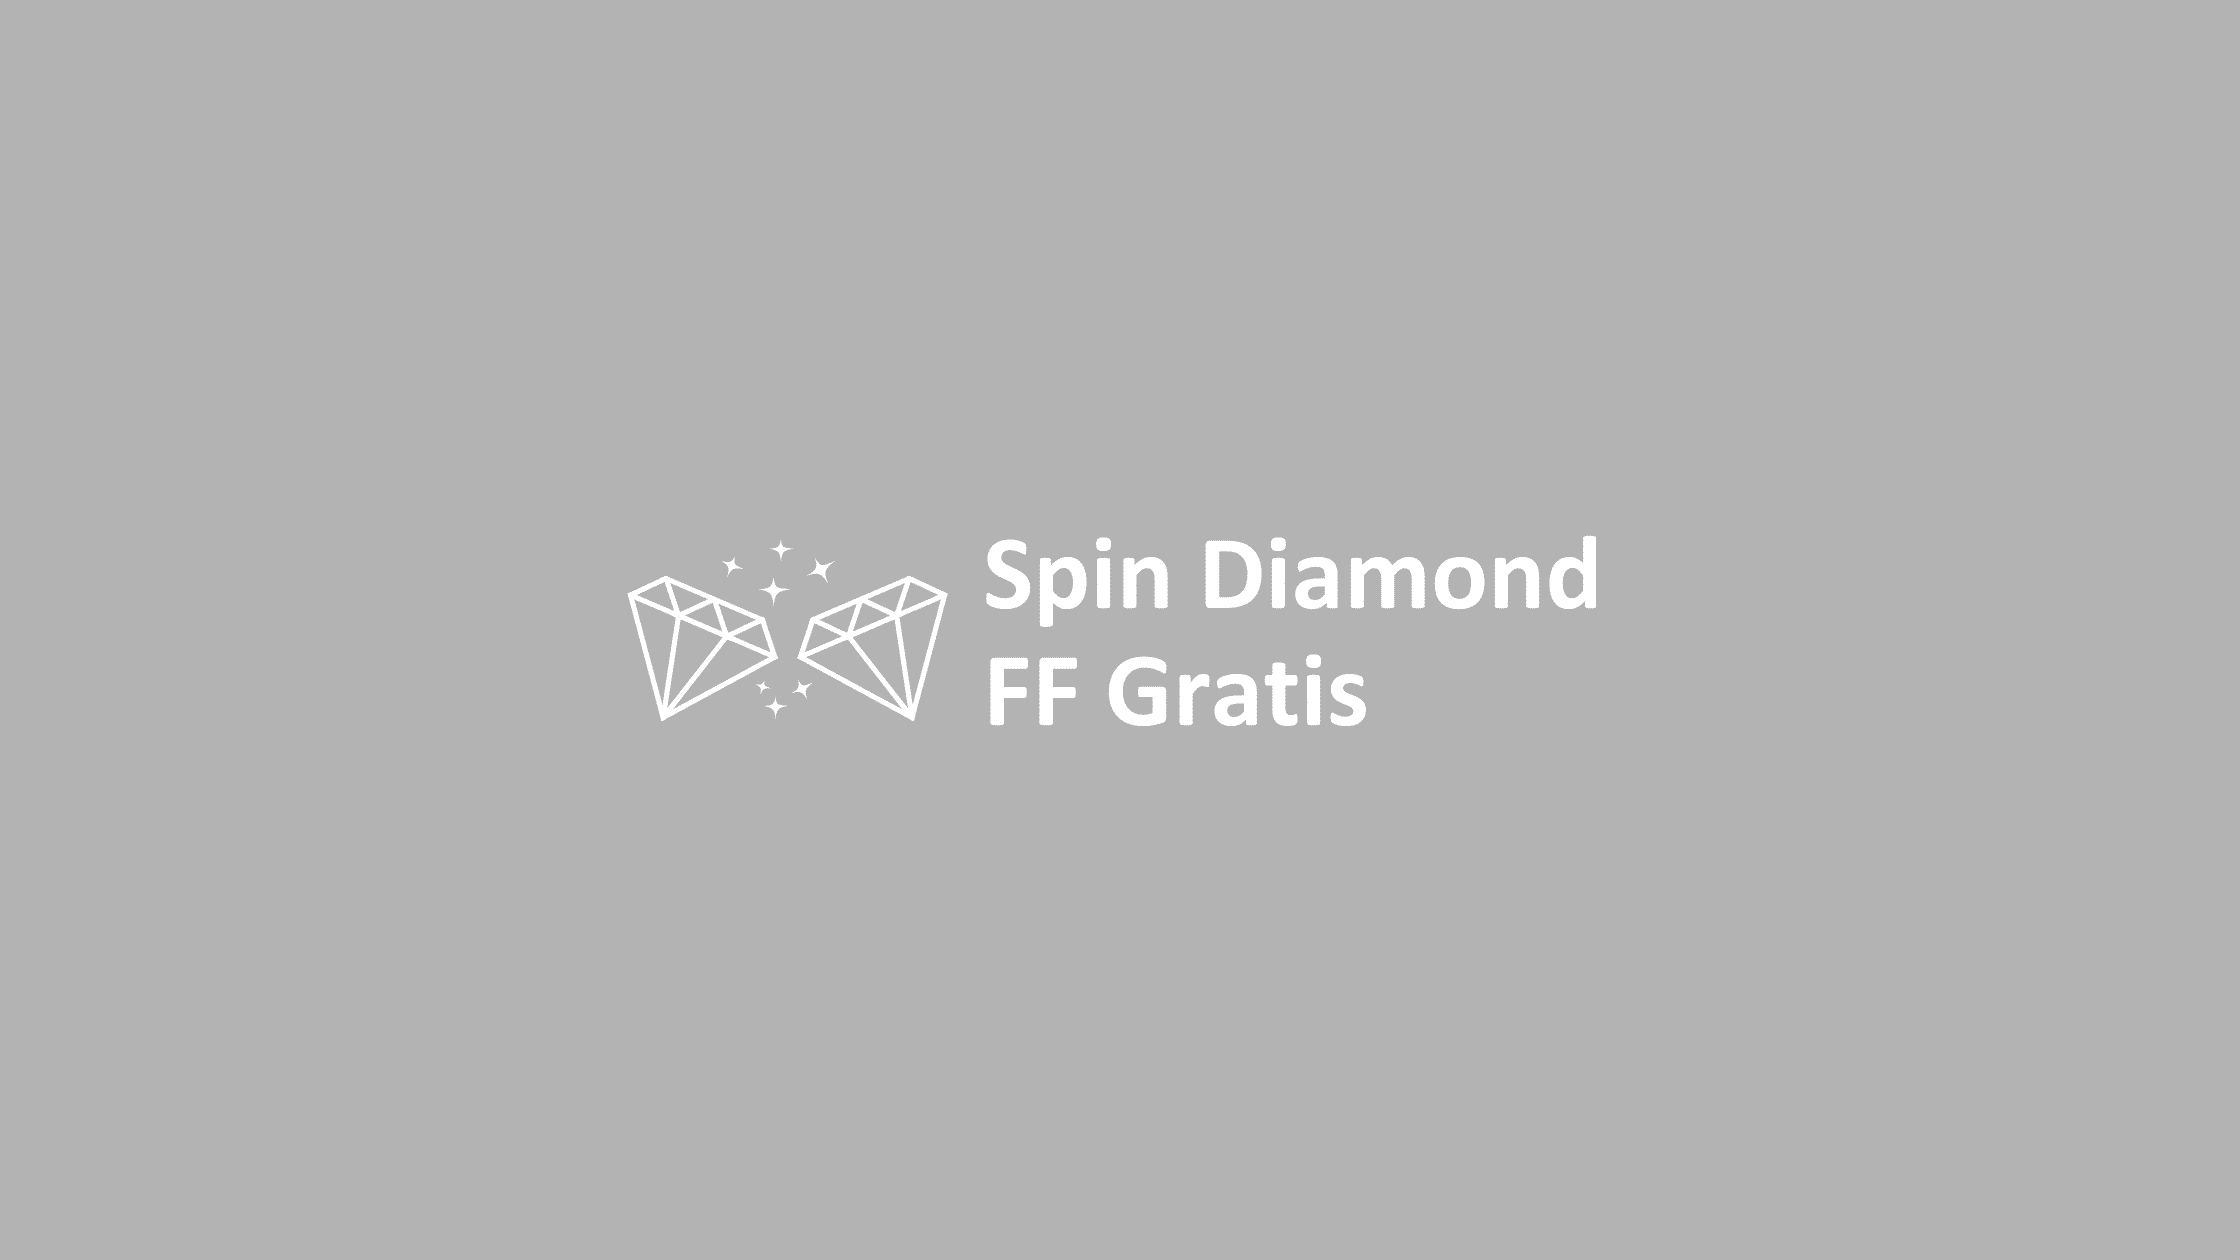 spin diamond ff gratis